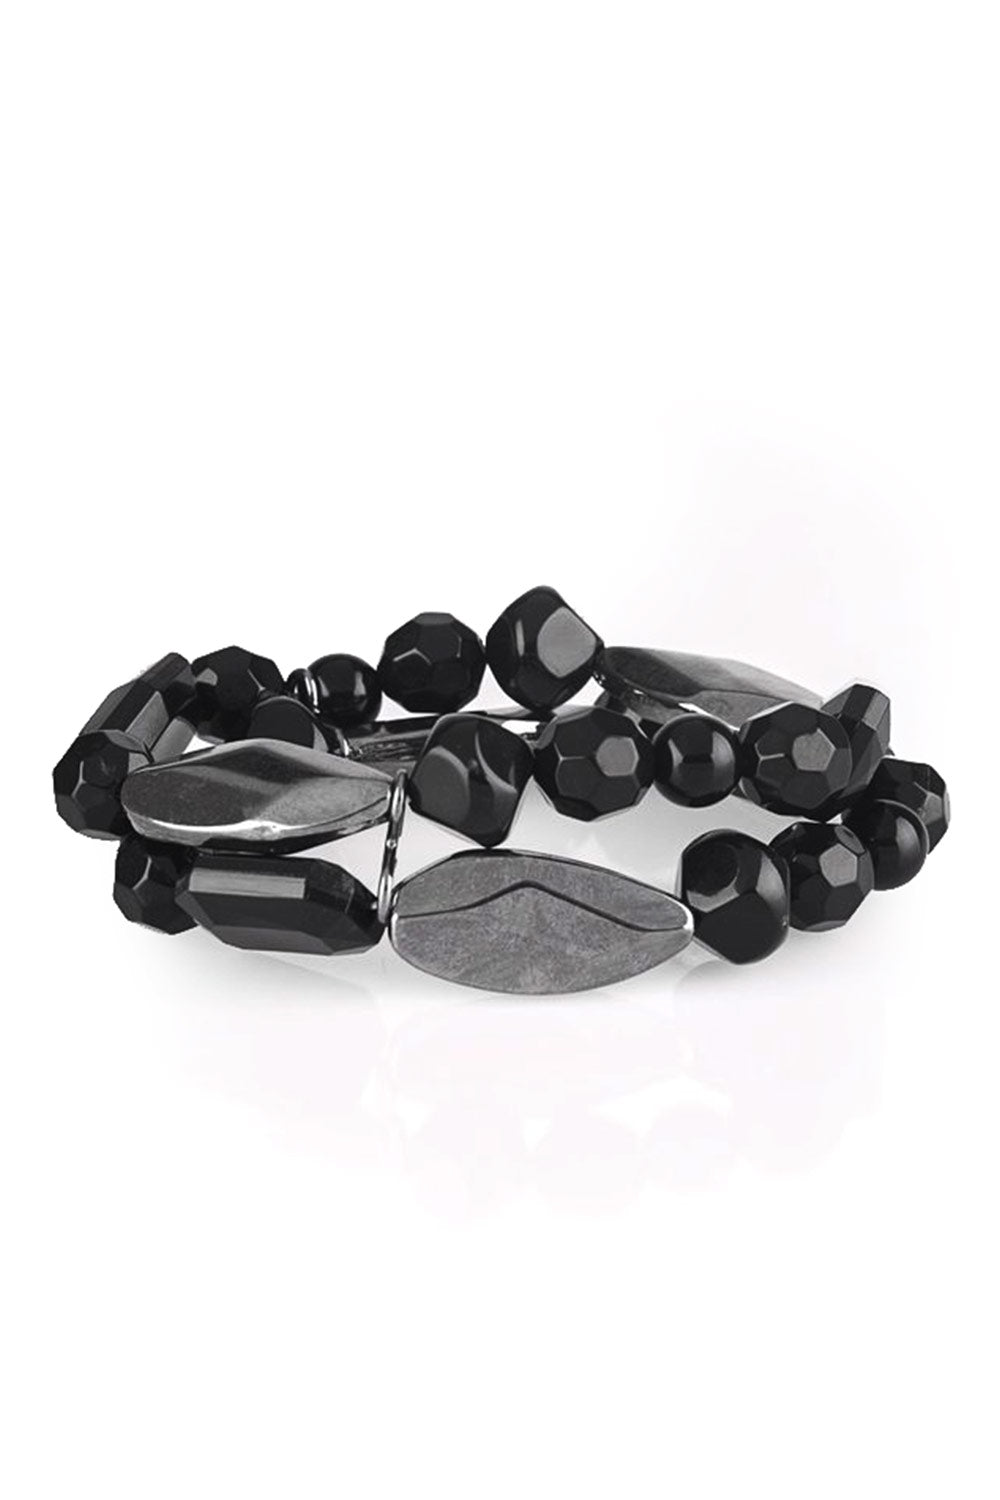 Rockin Rock Candy Black Bracelet - Paparazzi Accessories